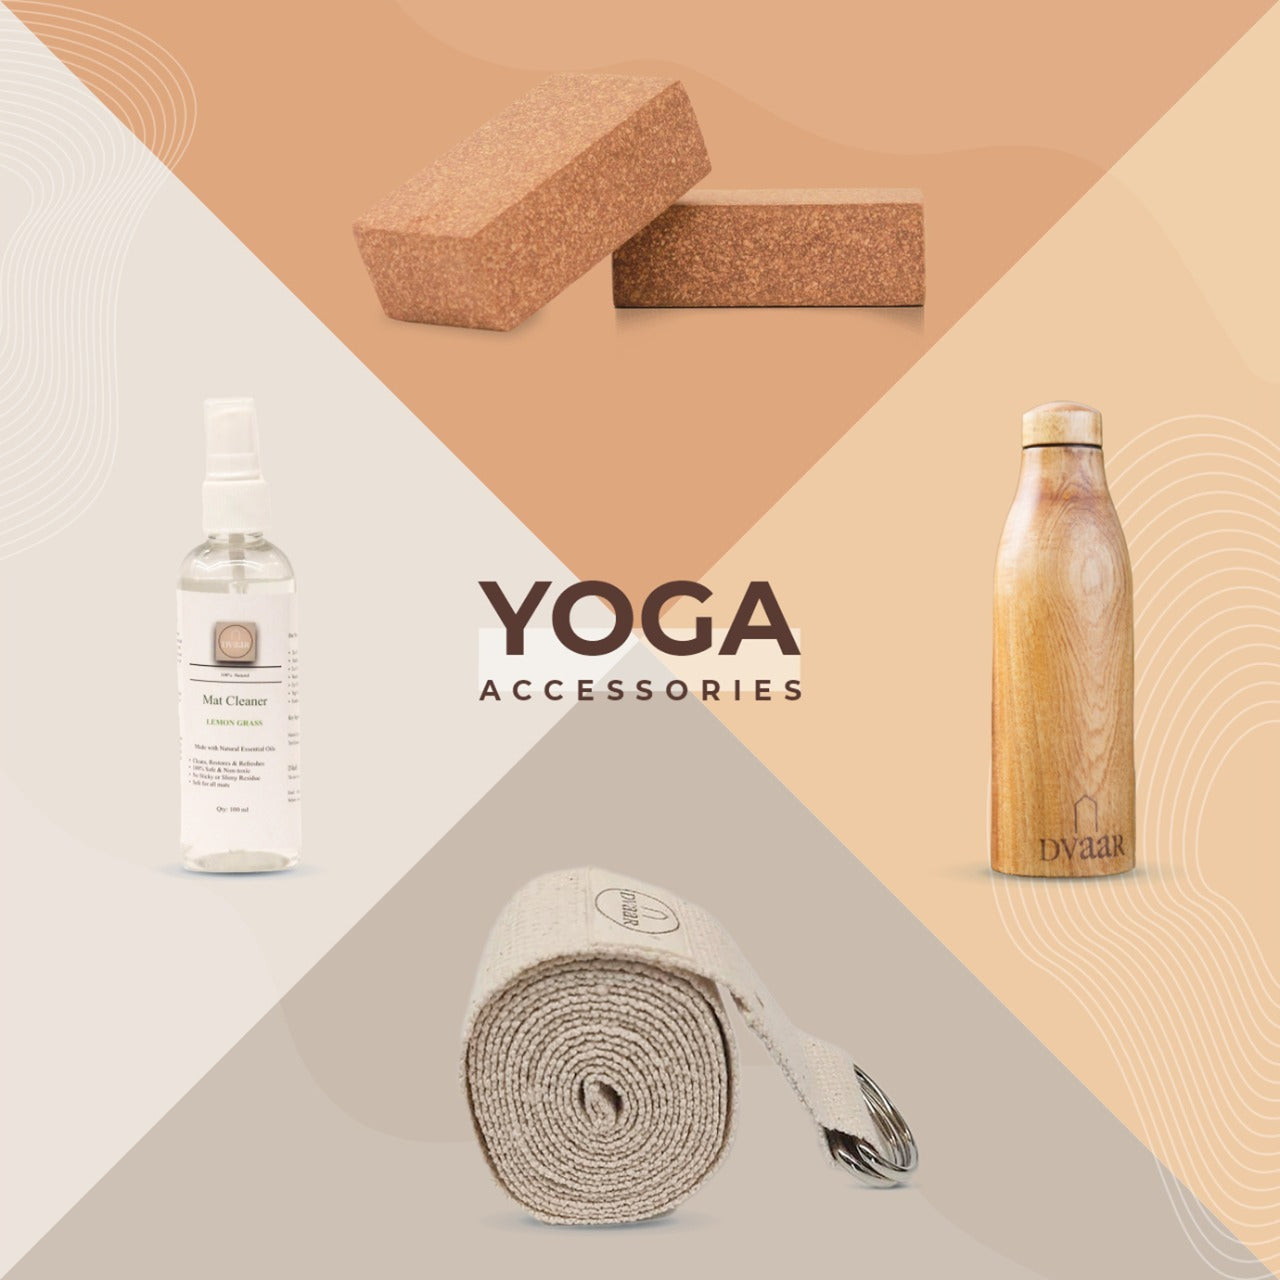 Yoga accessories